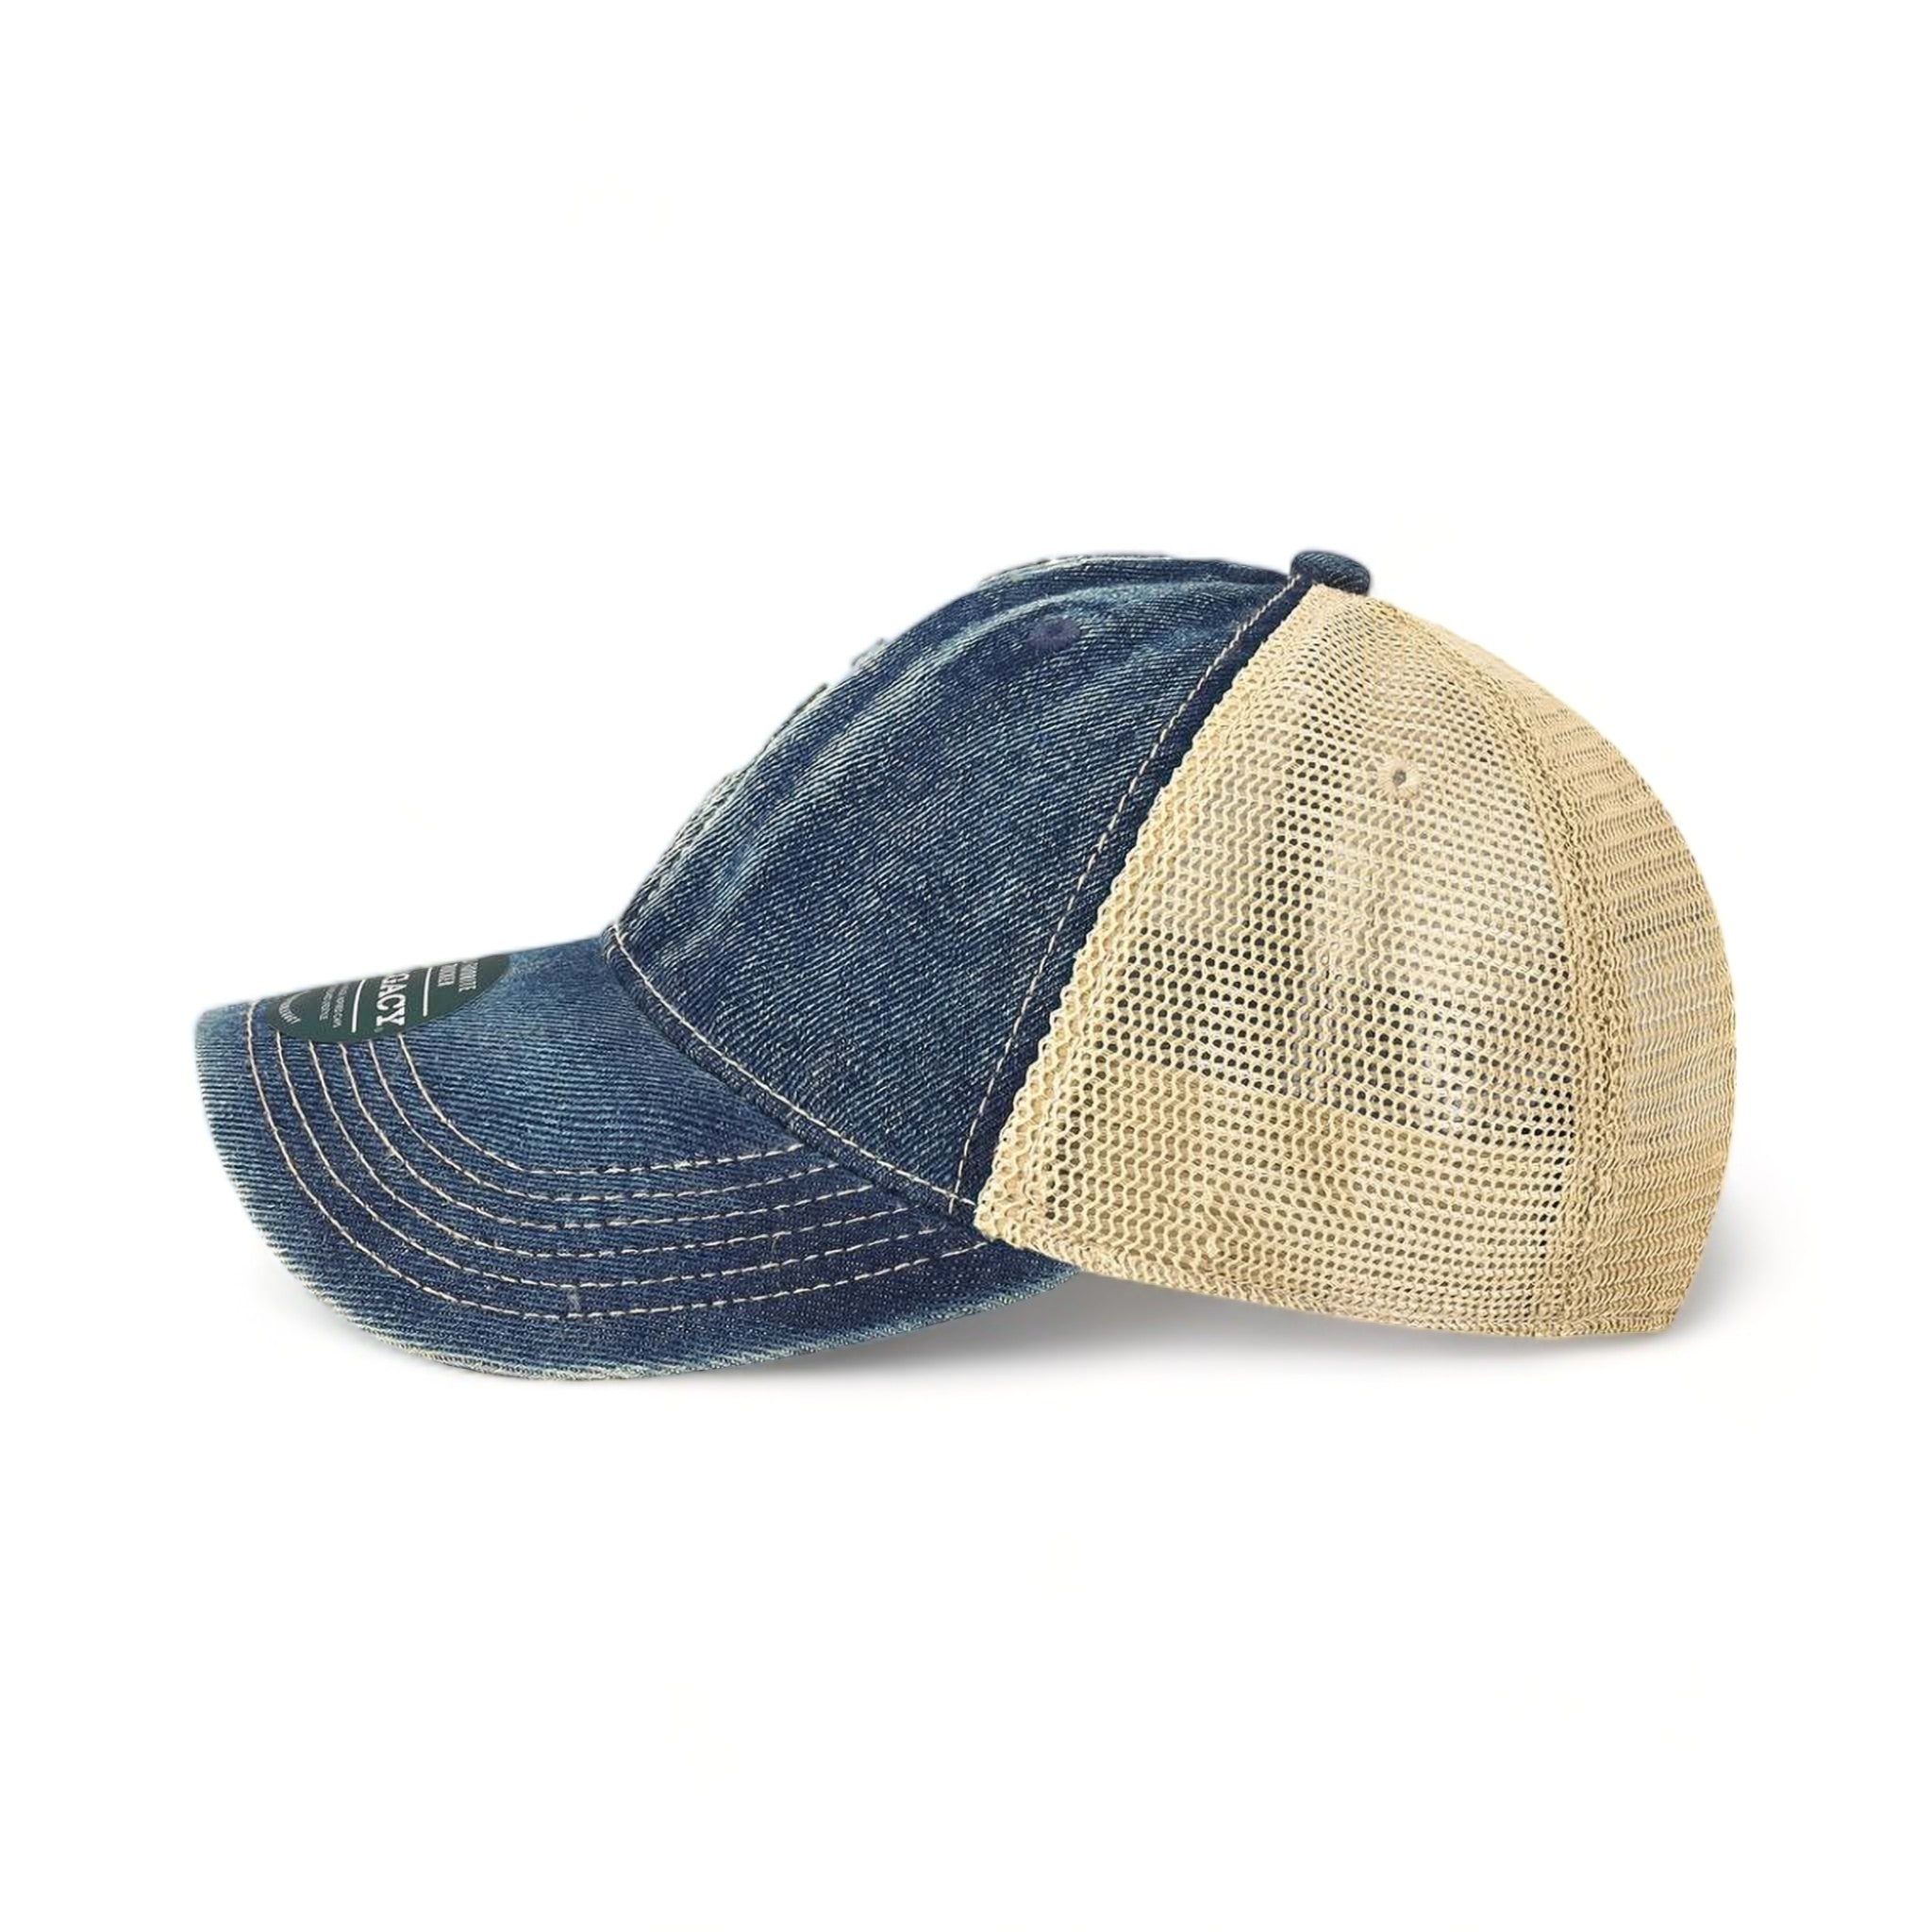 Side view of LEGACY OFA custom hat in blue denim and khaki